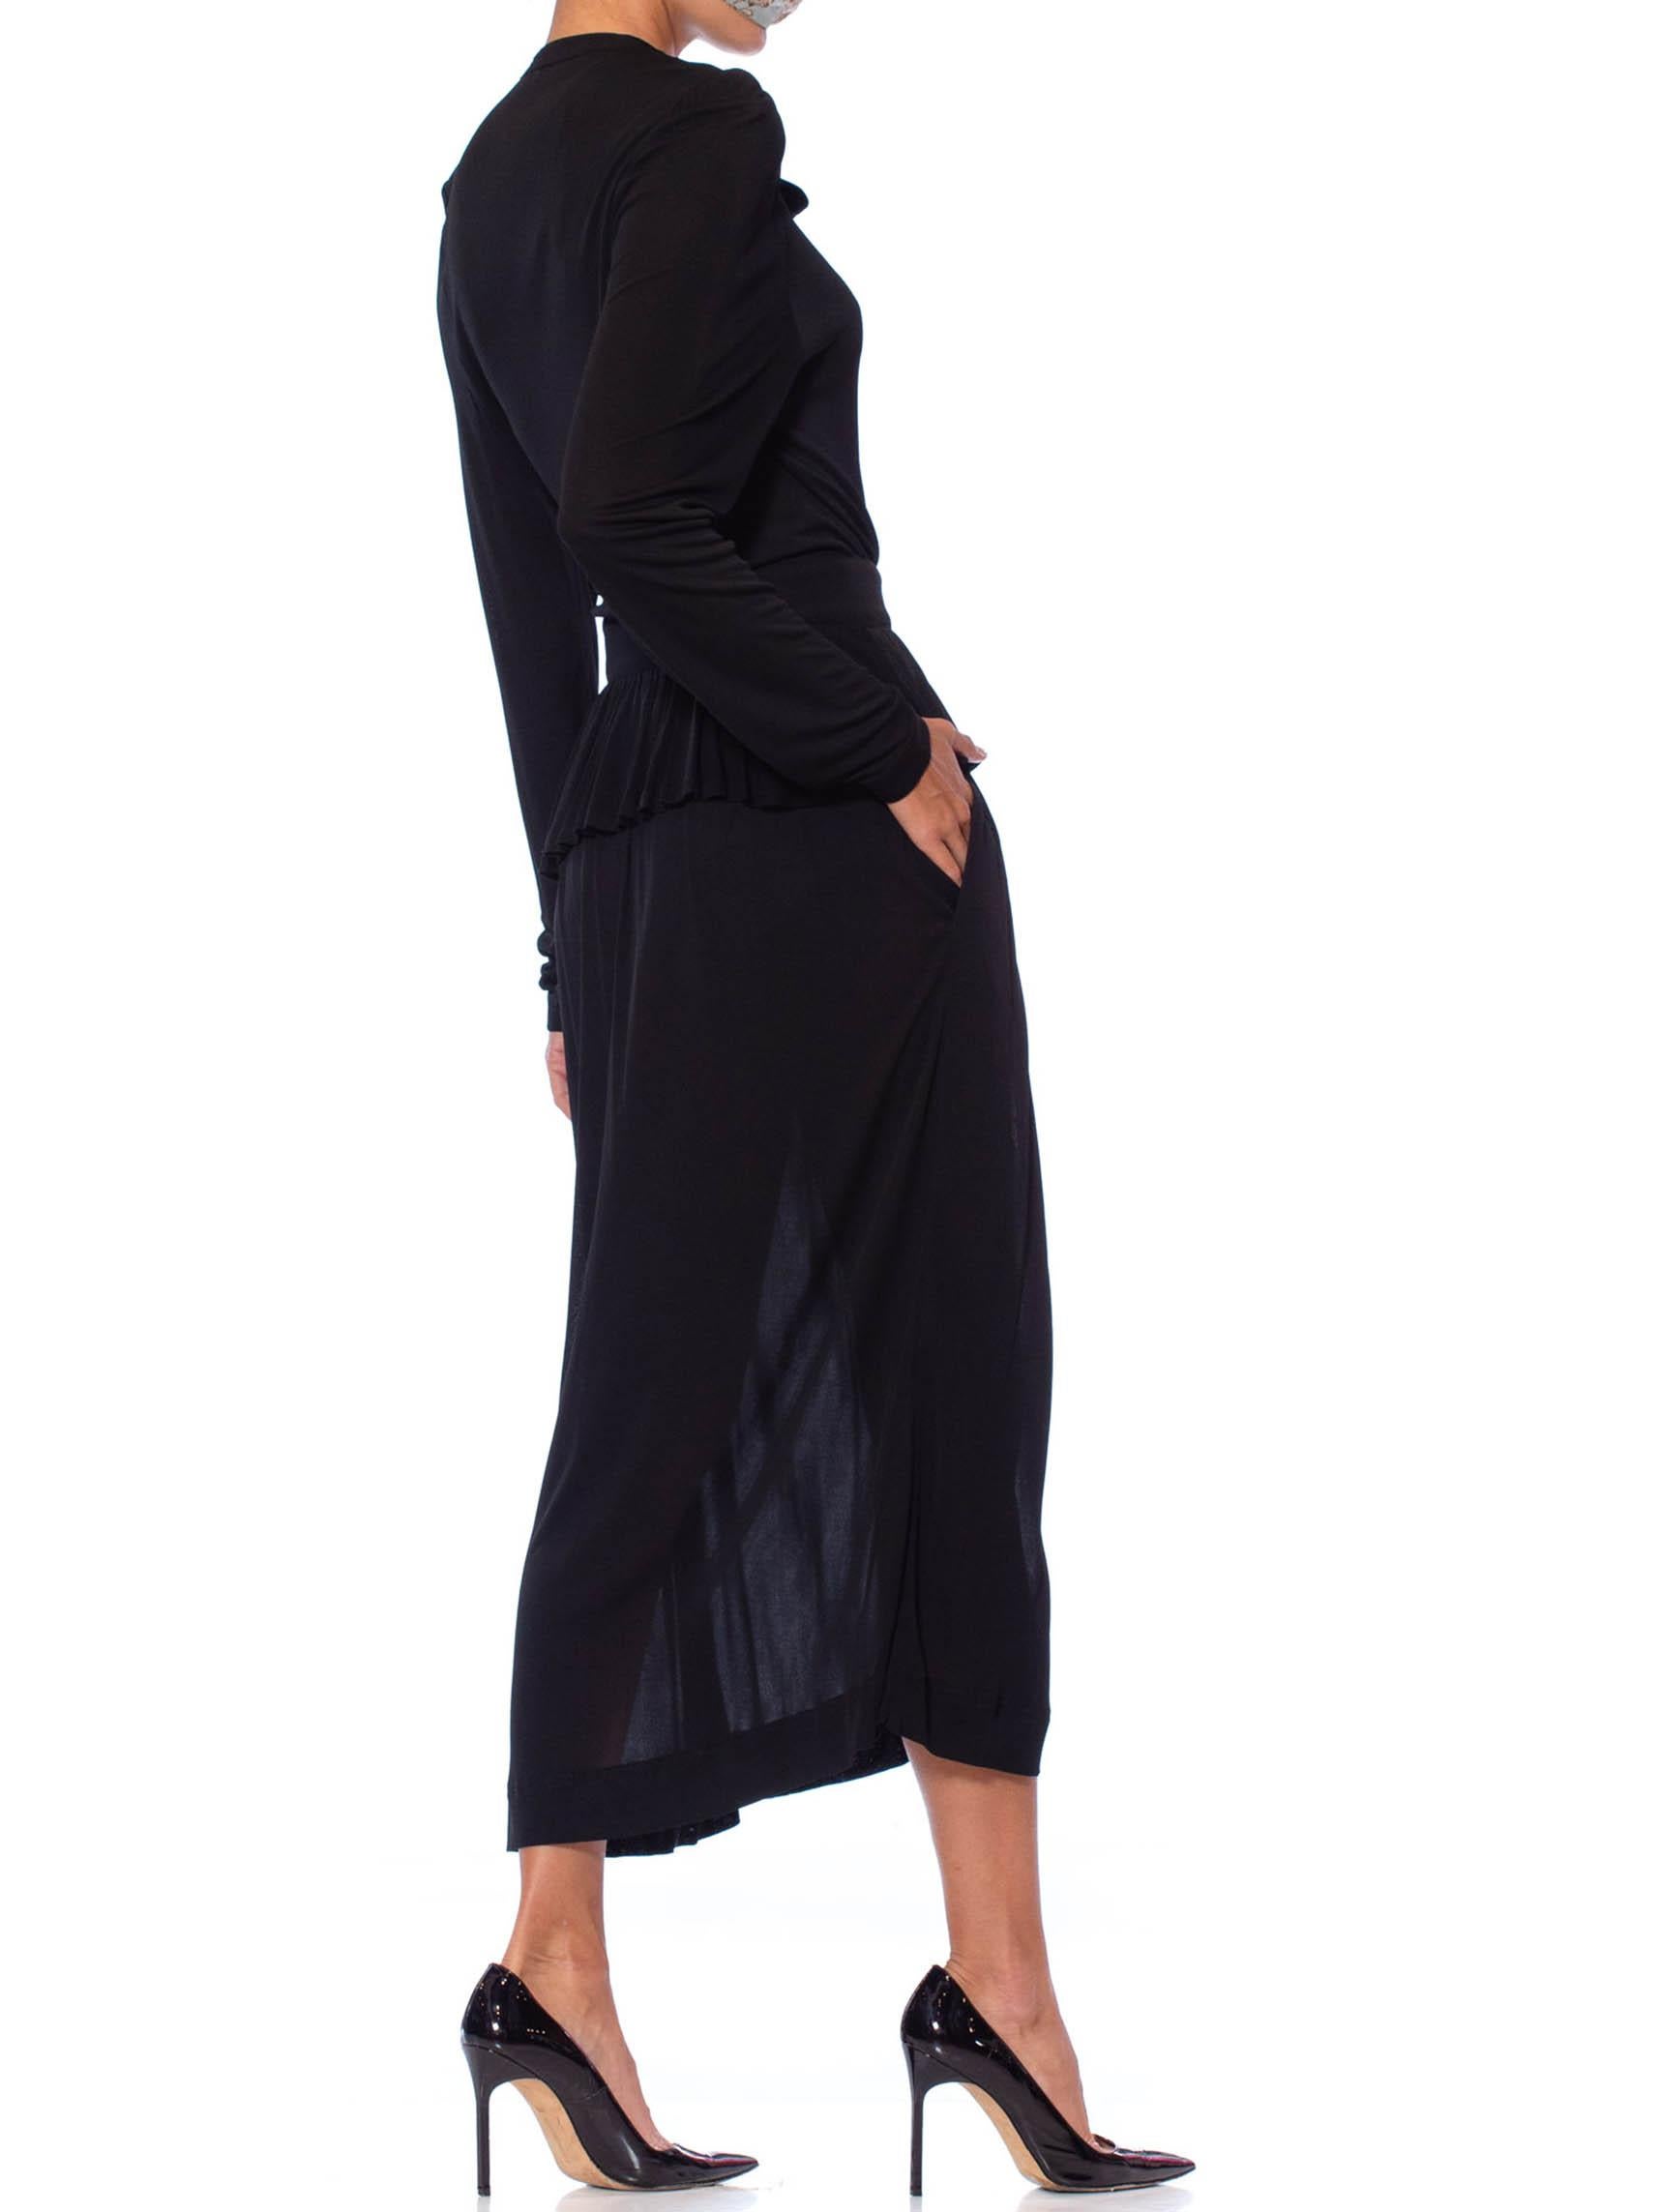 1970S JAEGER Black Rayon Jersey Ossie Clark Style Long Sleeve Dress 2